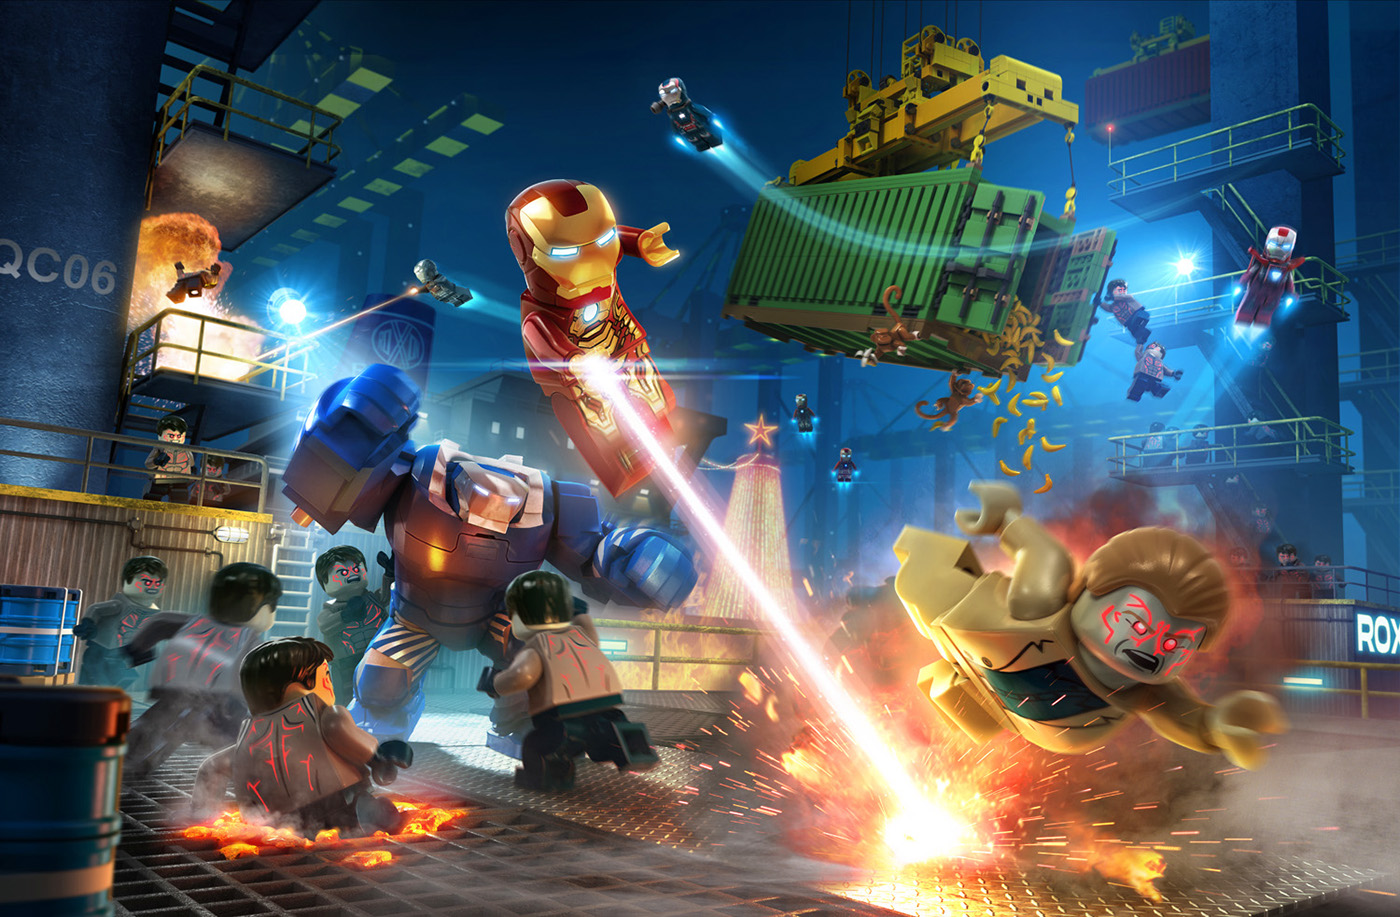 LEGO Avengers marvel Superheros captain america ironman Hulk ultron antman hulkbuster